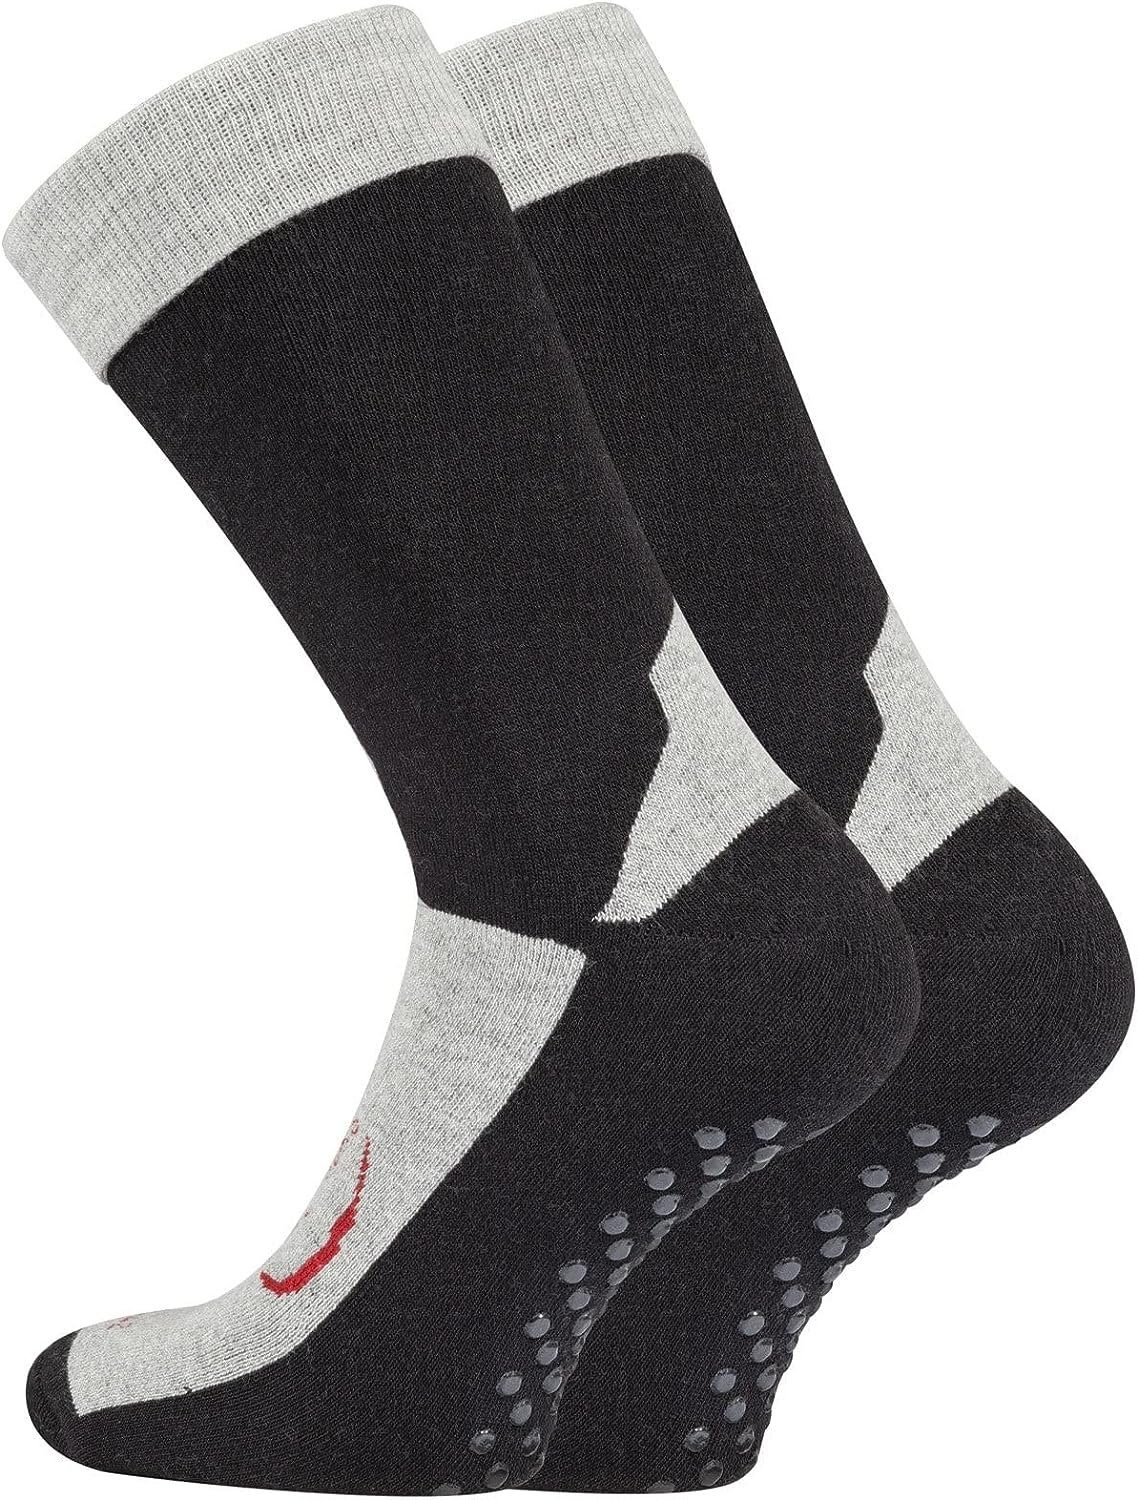 TippTexx 24 Haussocken 2 Paar Homesocks ABS-Socken, Stopper-Socken, Anti-Rutsch-Socken Schwarz